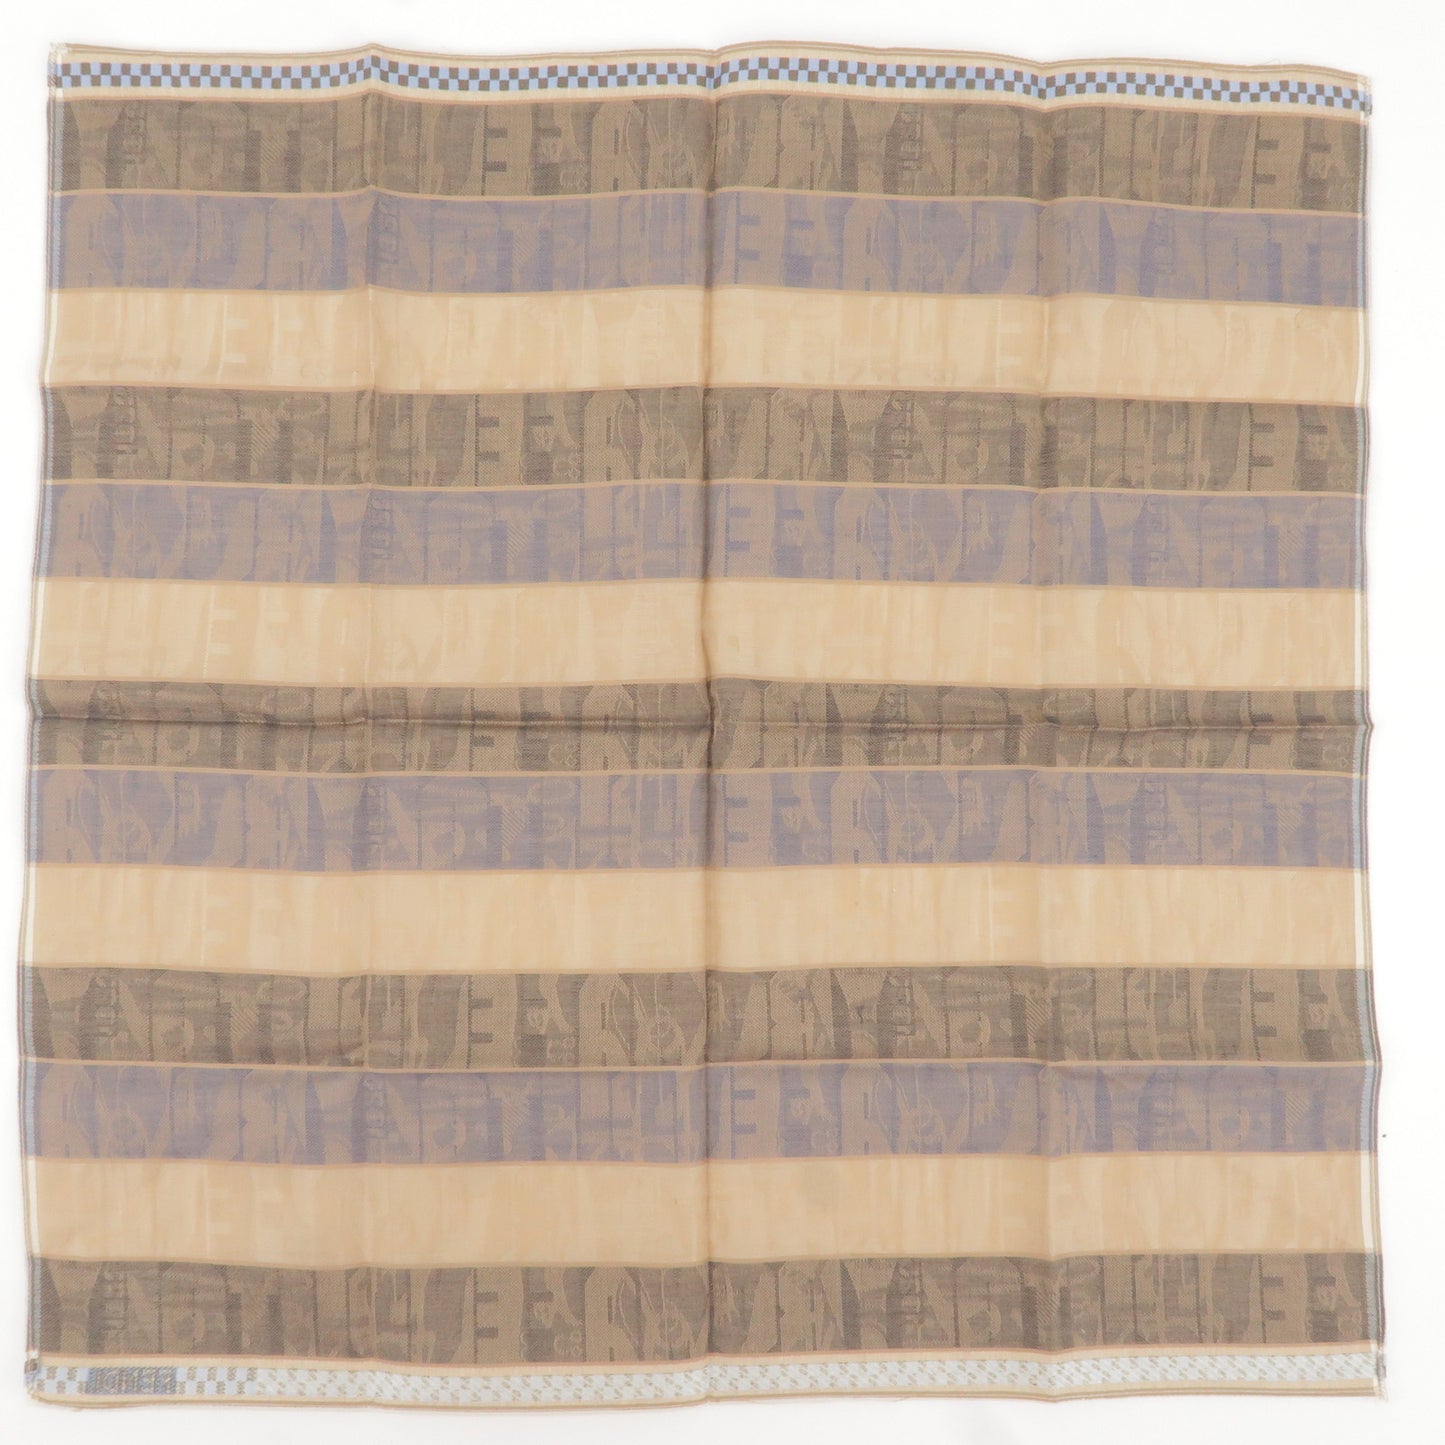 FENDI Set of 5 Cotton Handkerchief Set White Brown Black Gray Blue